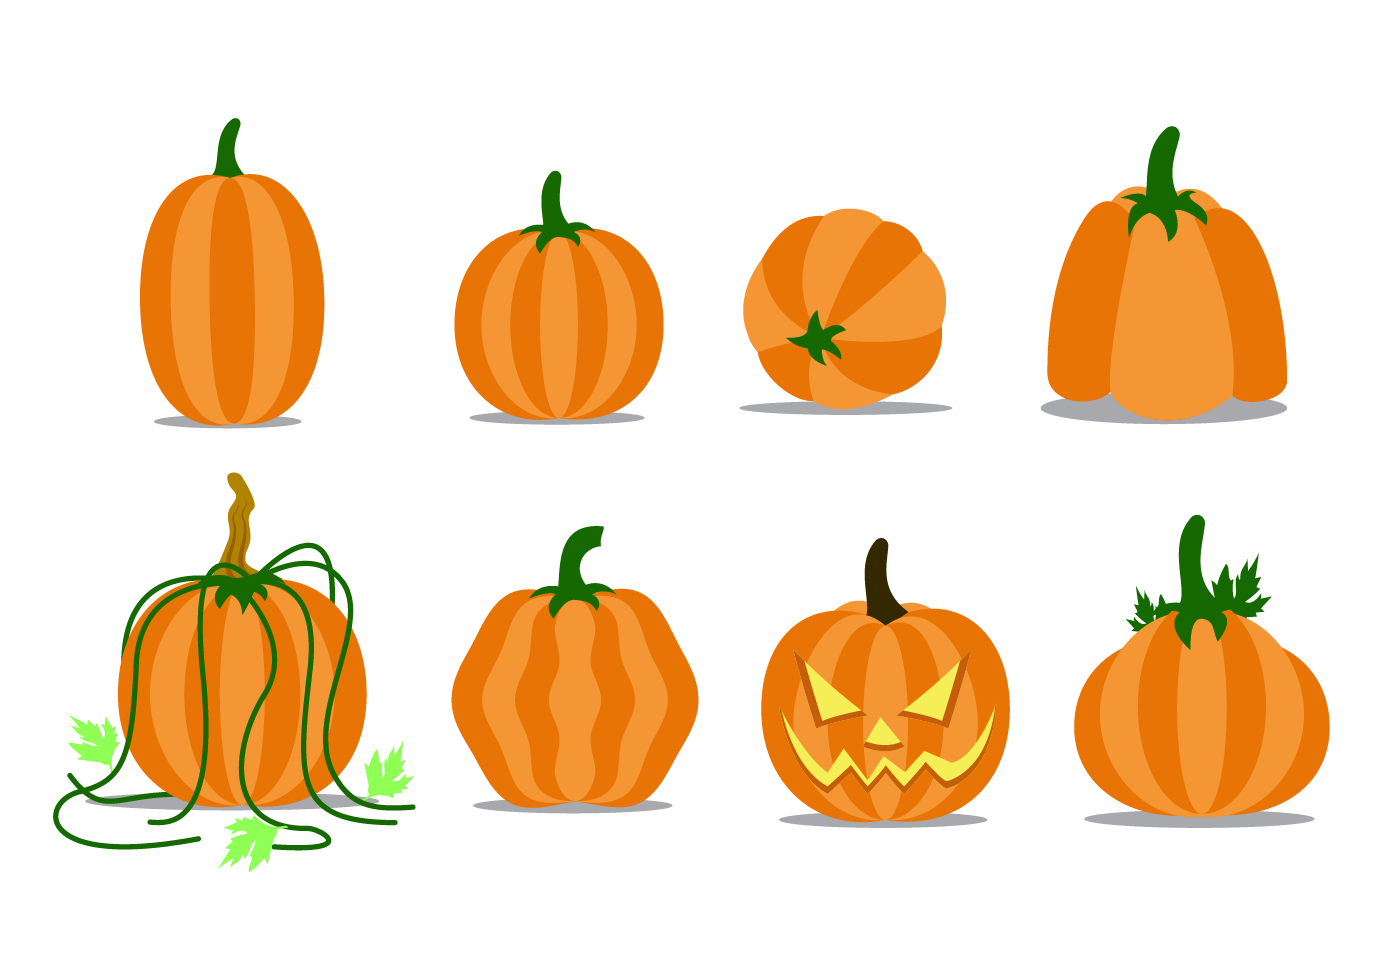 Download Pumpkin Patch Vector - Download Free Vector Art, Stock Graphics & Images